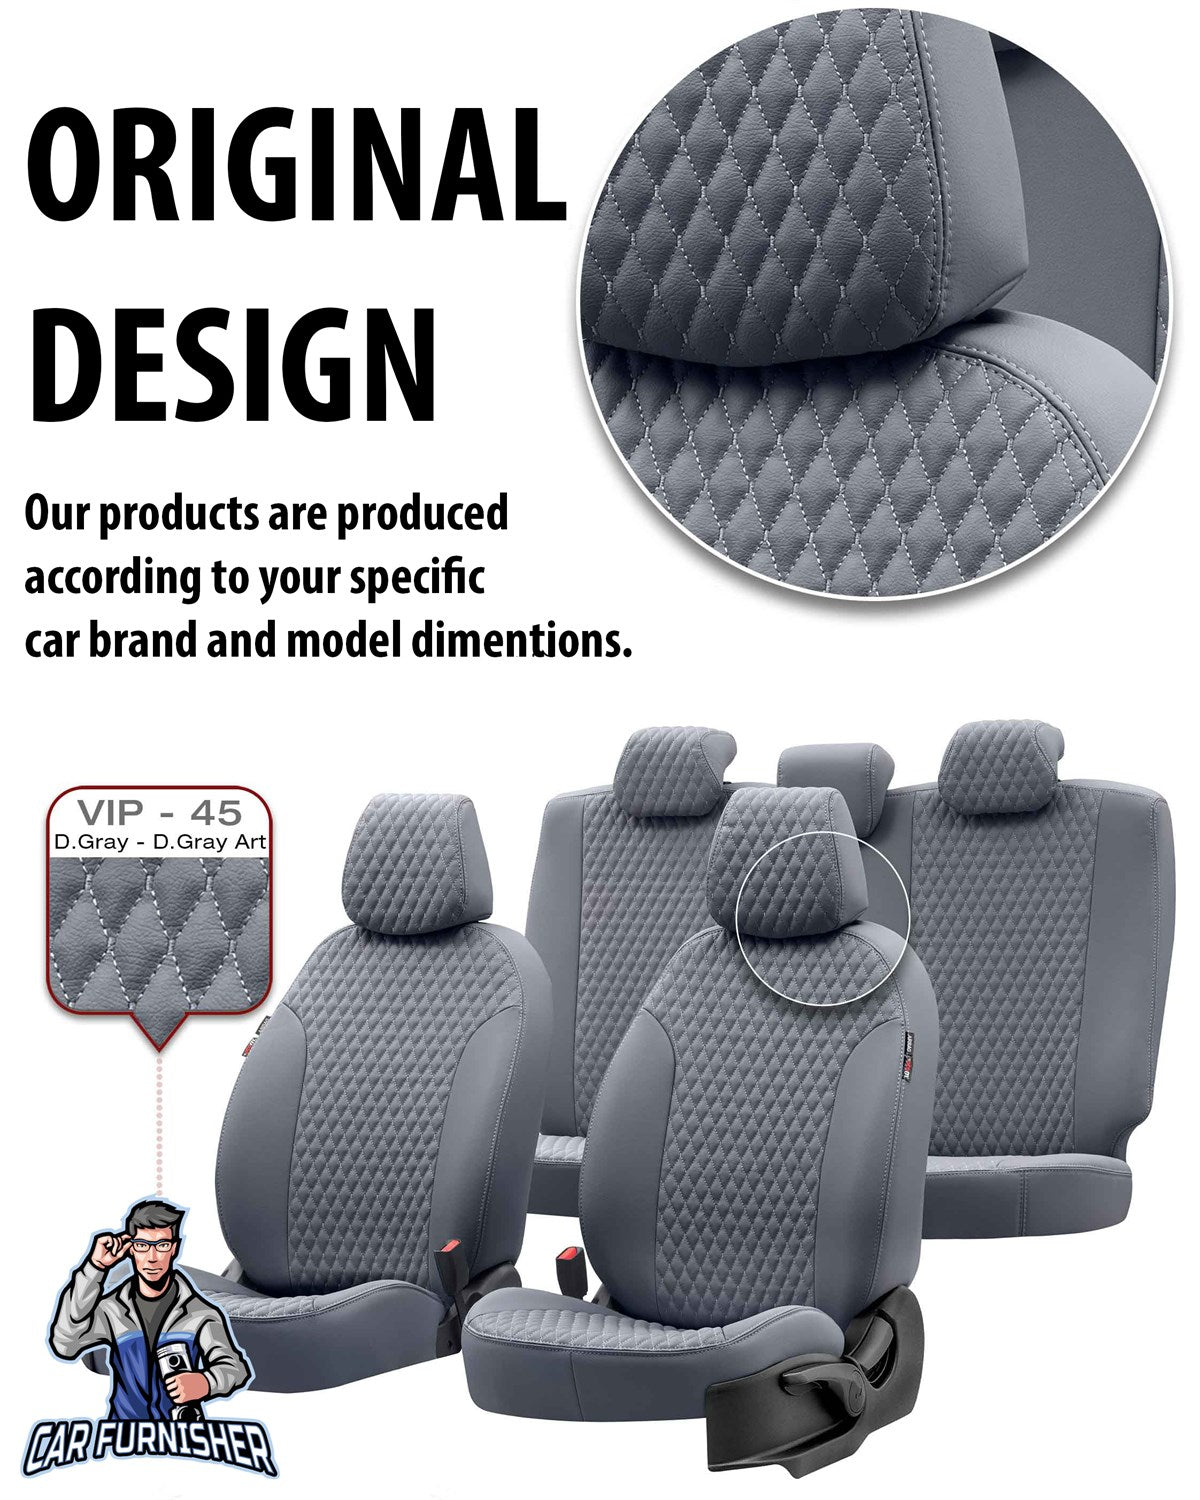 Suzuki Swift Seat Covers Amsterdam Leather Design Smoked Black Leather